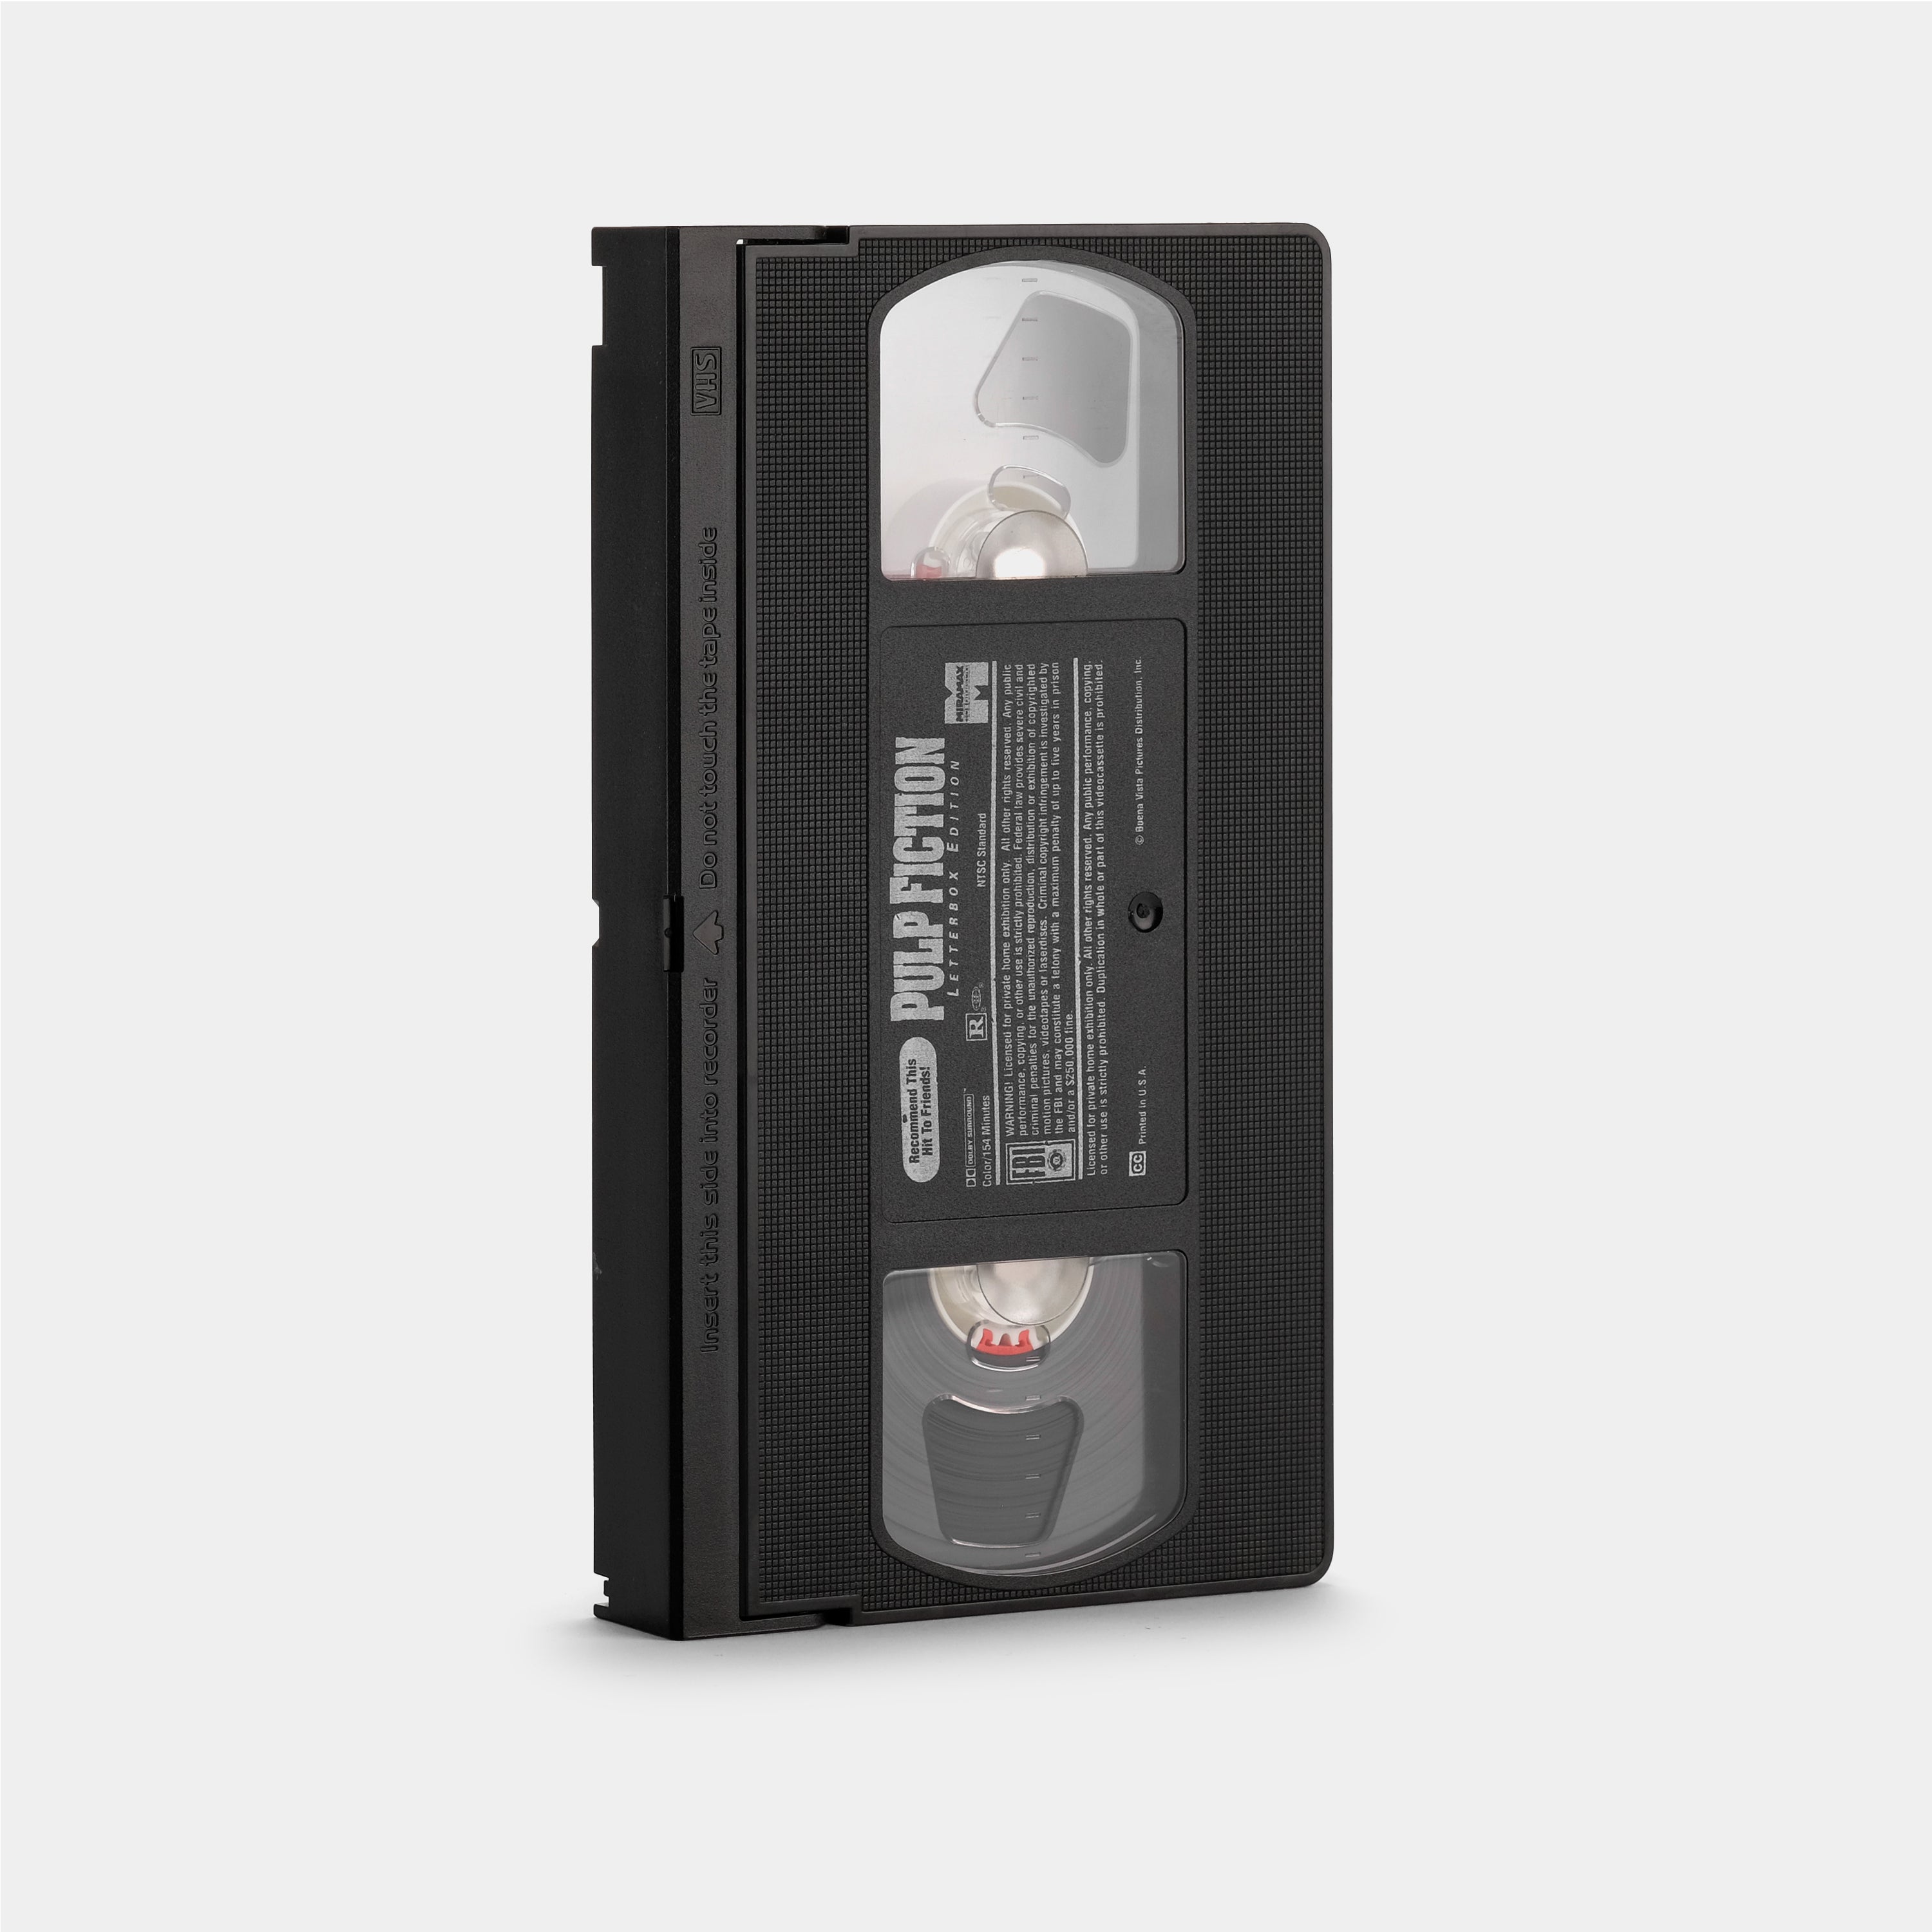 Pulp Fiction VHS Tape